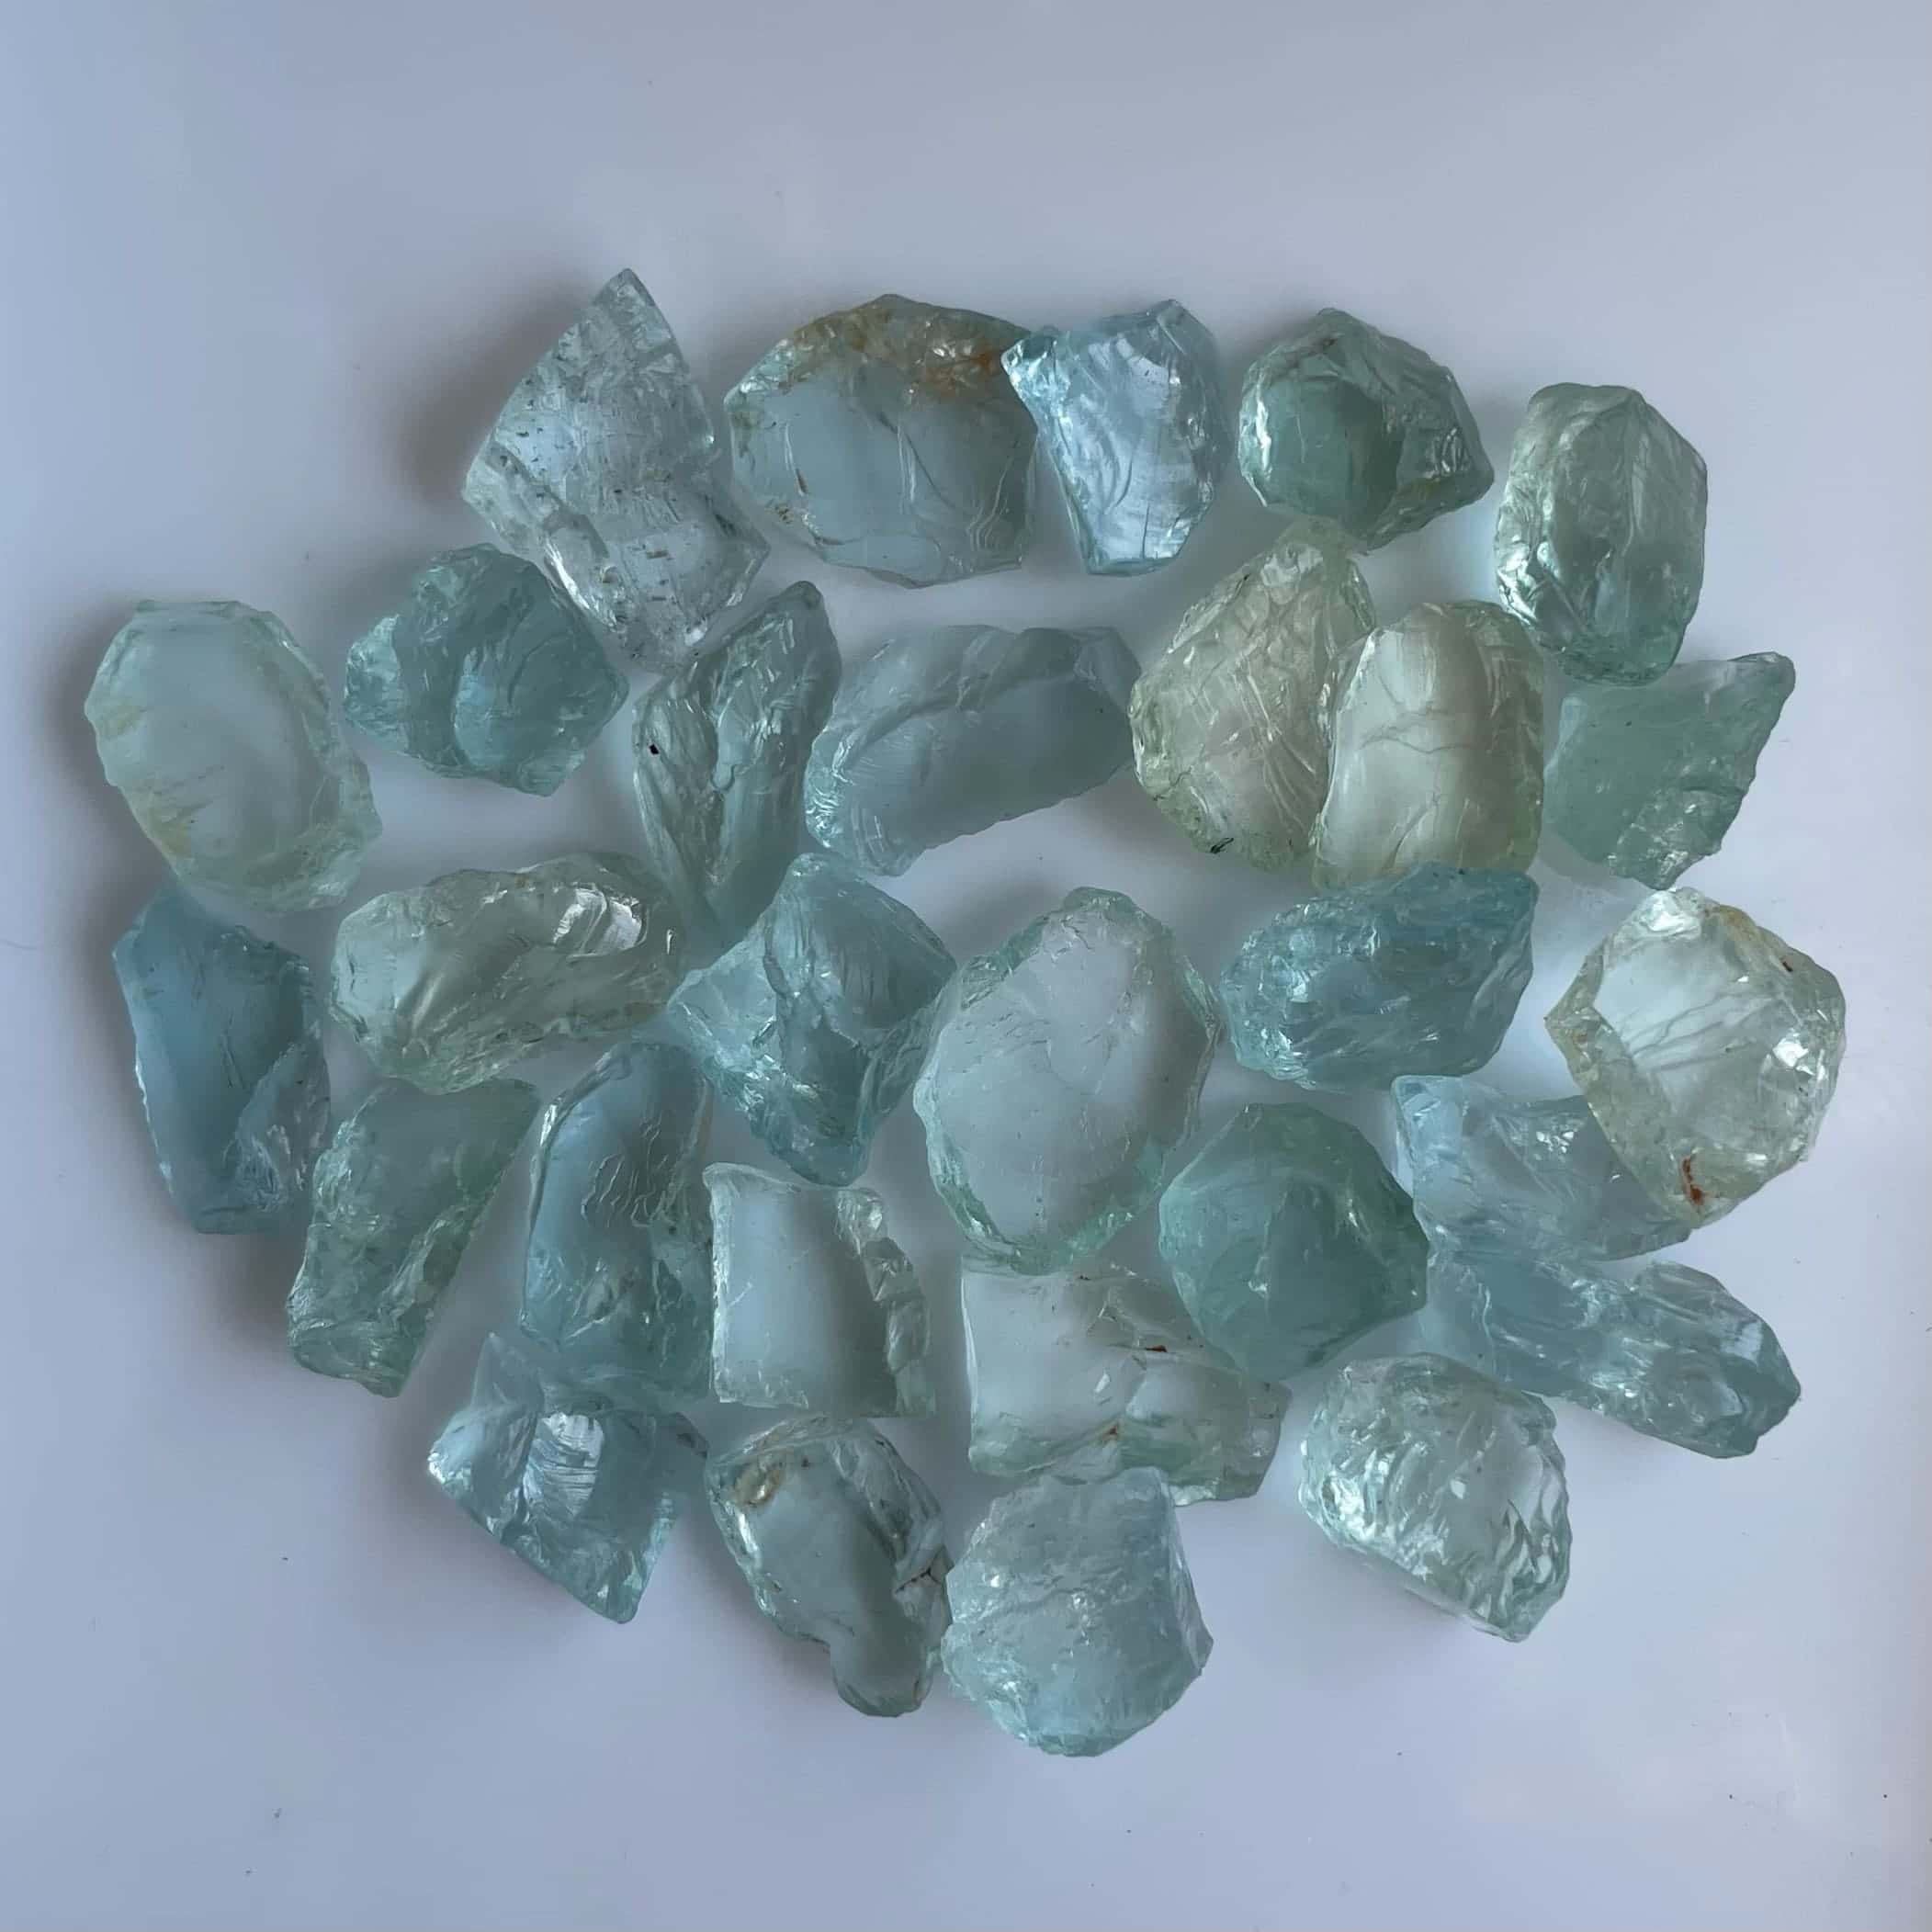 96 carats Aquamarine